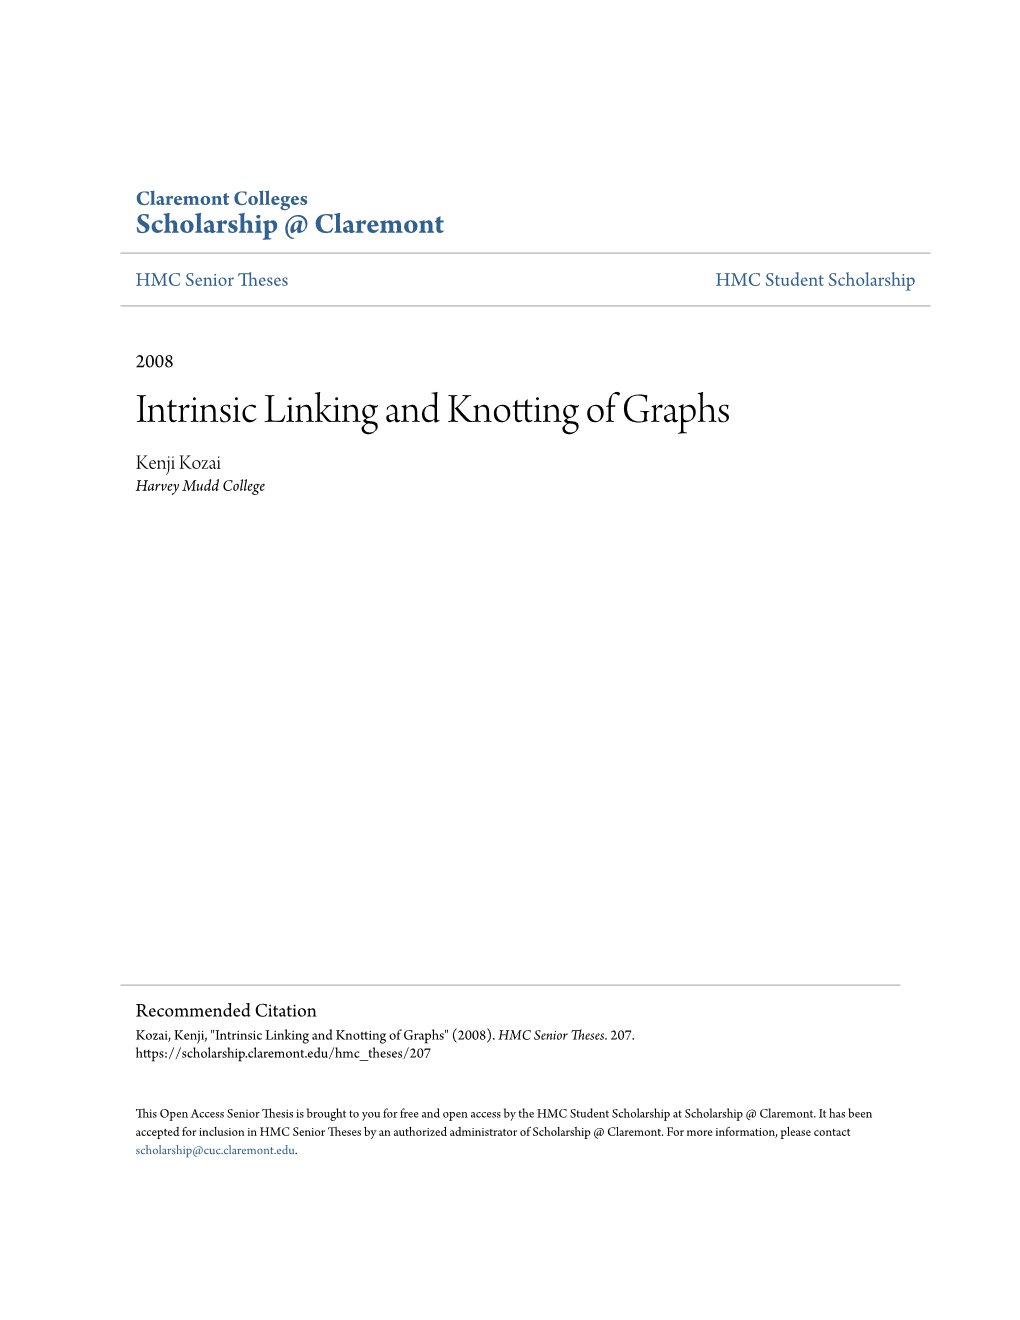 Intrinsic Linking and Knotting of Graphs Kenji Kozai Harvey Mudd College